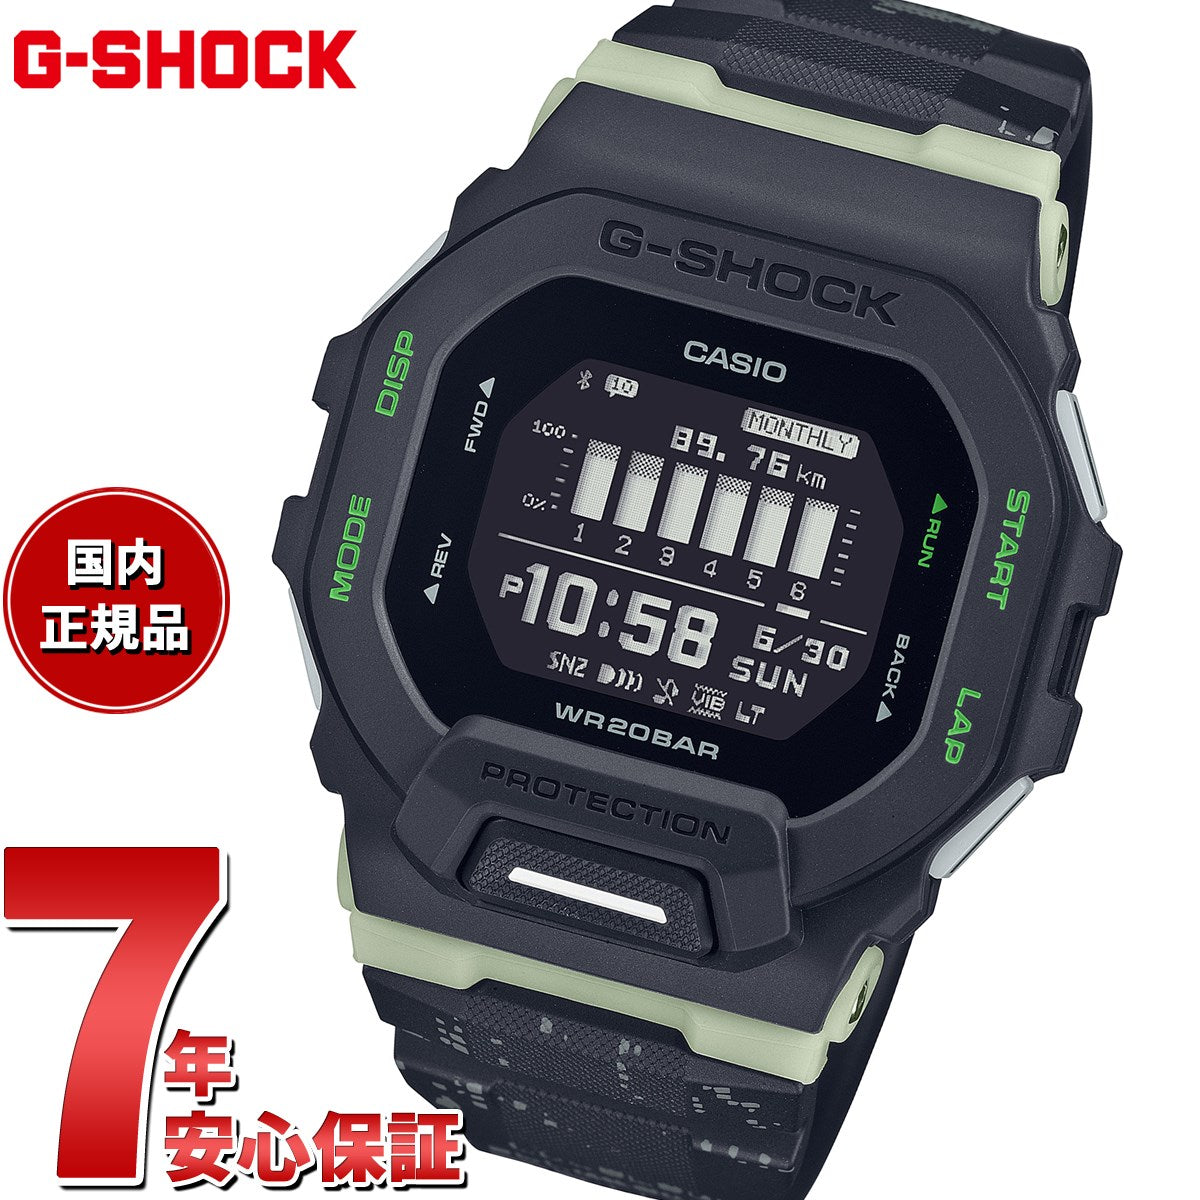 G-SHOCK Gショック G-SQUAD ジースクワッド GBD-200シリーズ GBD-200LM-1JF メンズ 腕時計 Bluetooth  デジタル ブラック CASIO カシオ